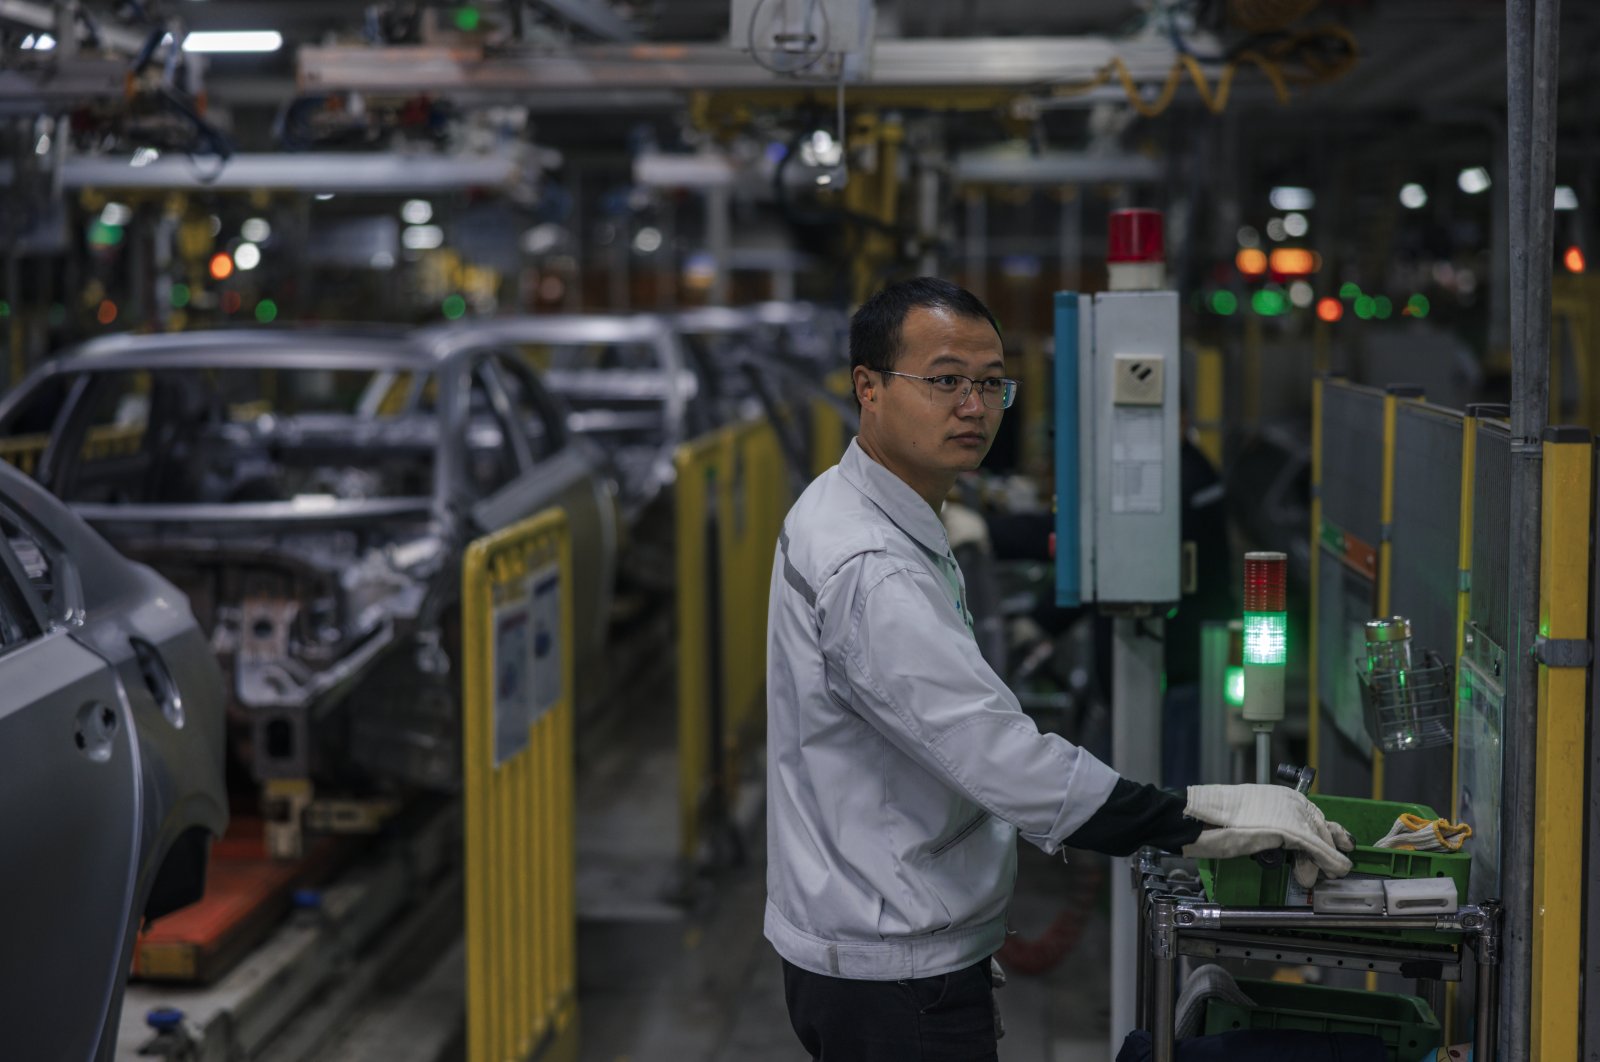 A man works in the Kia Motors factory, during a media trip in Yancheng, Jiangsu province, China, Oct. 28, 2021. (EPA Photo)